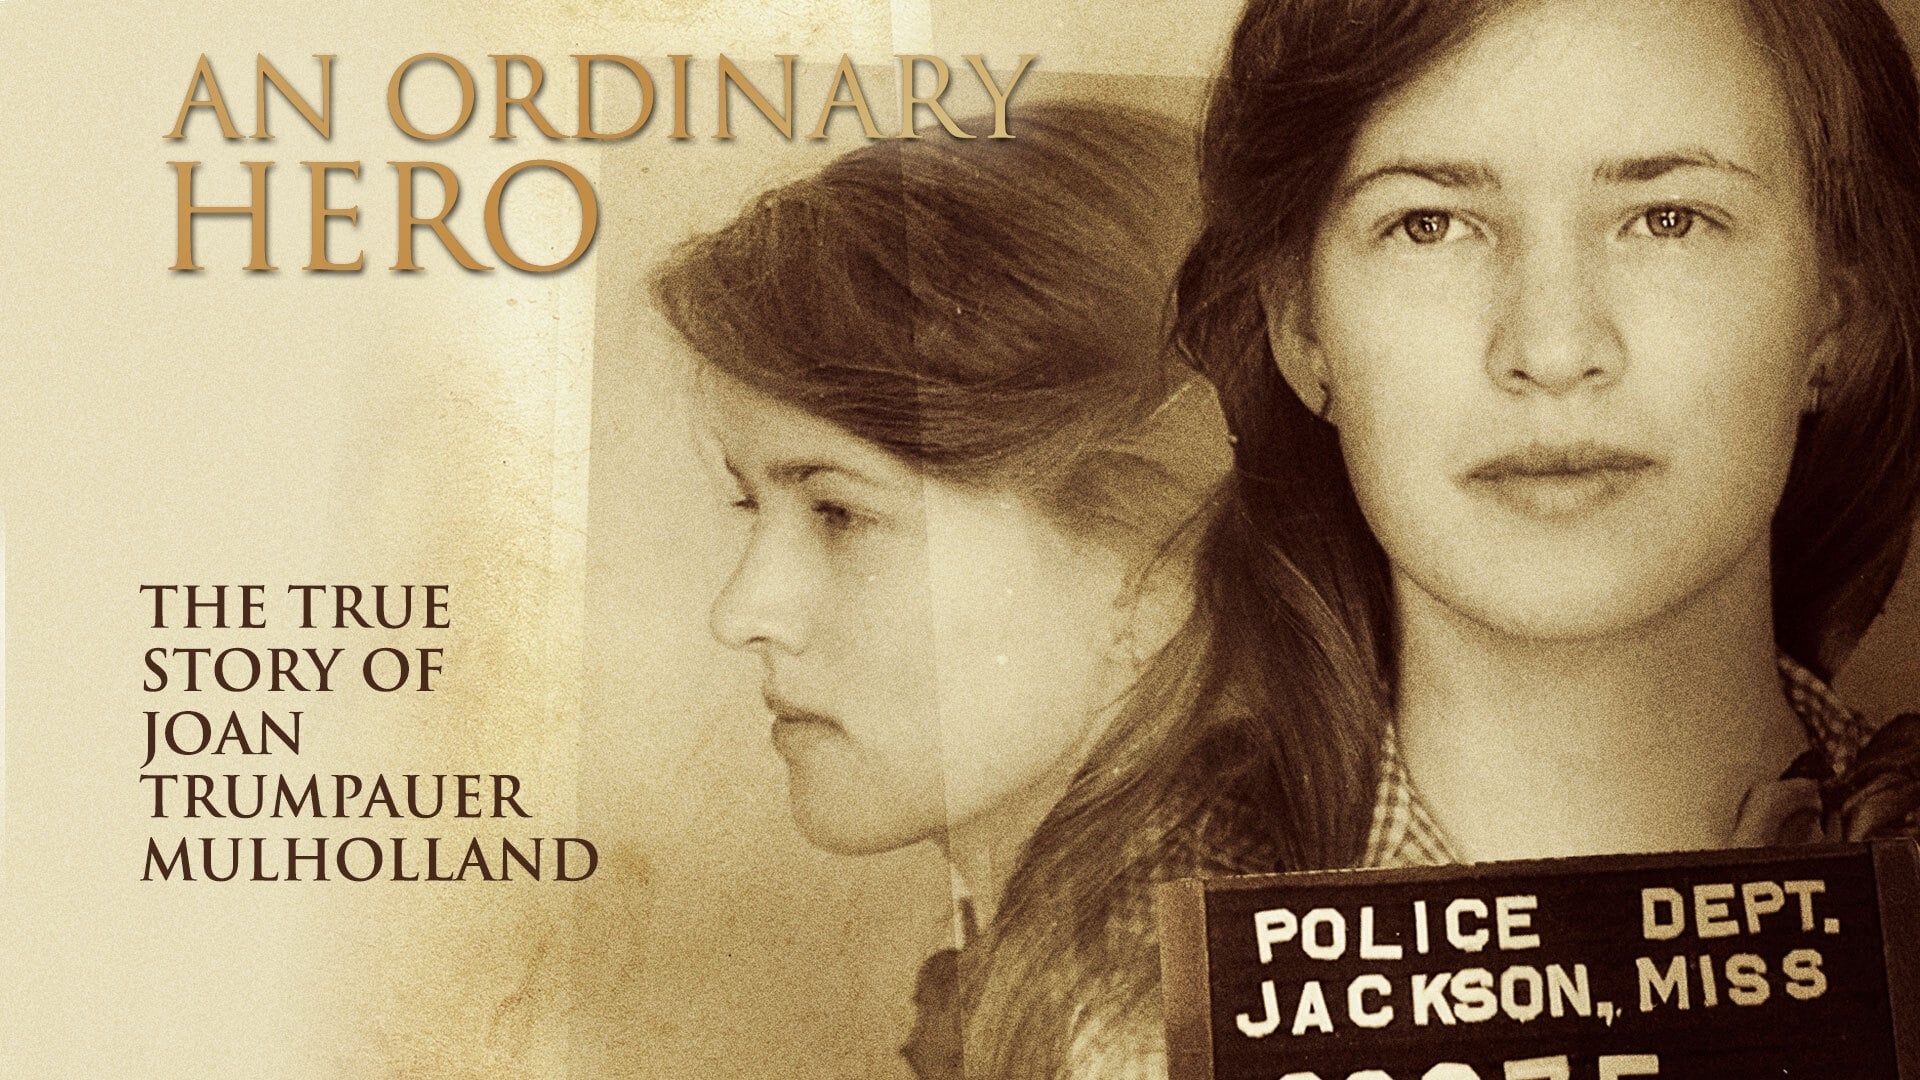 An Ordinary Hero: The True Story of Joan Trumpauer Mulholland background